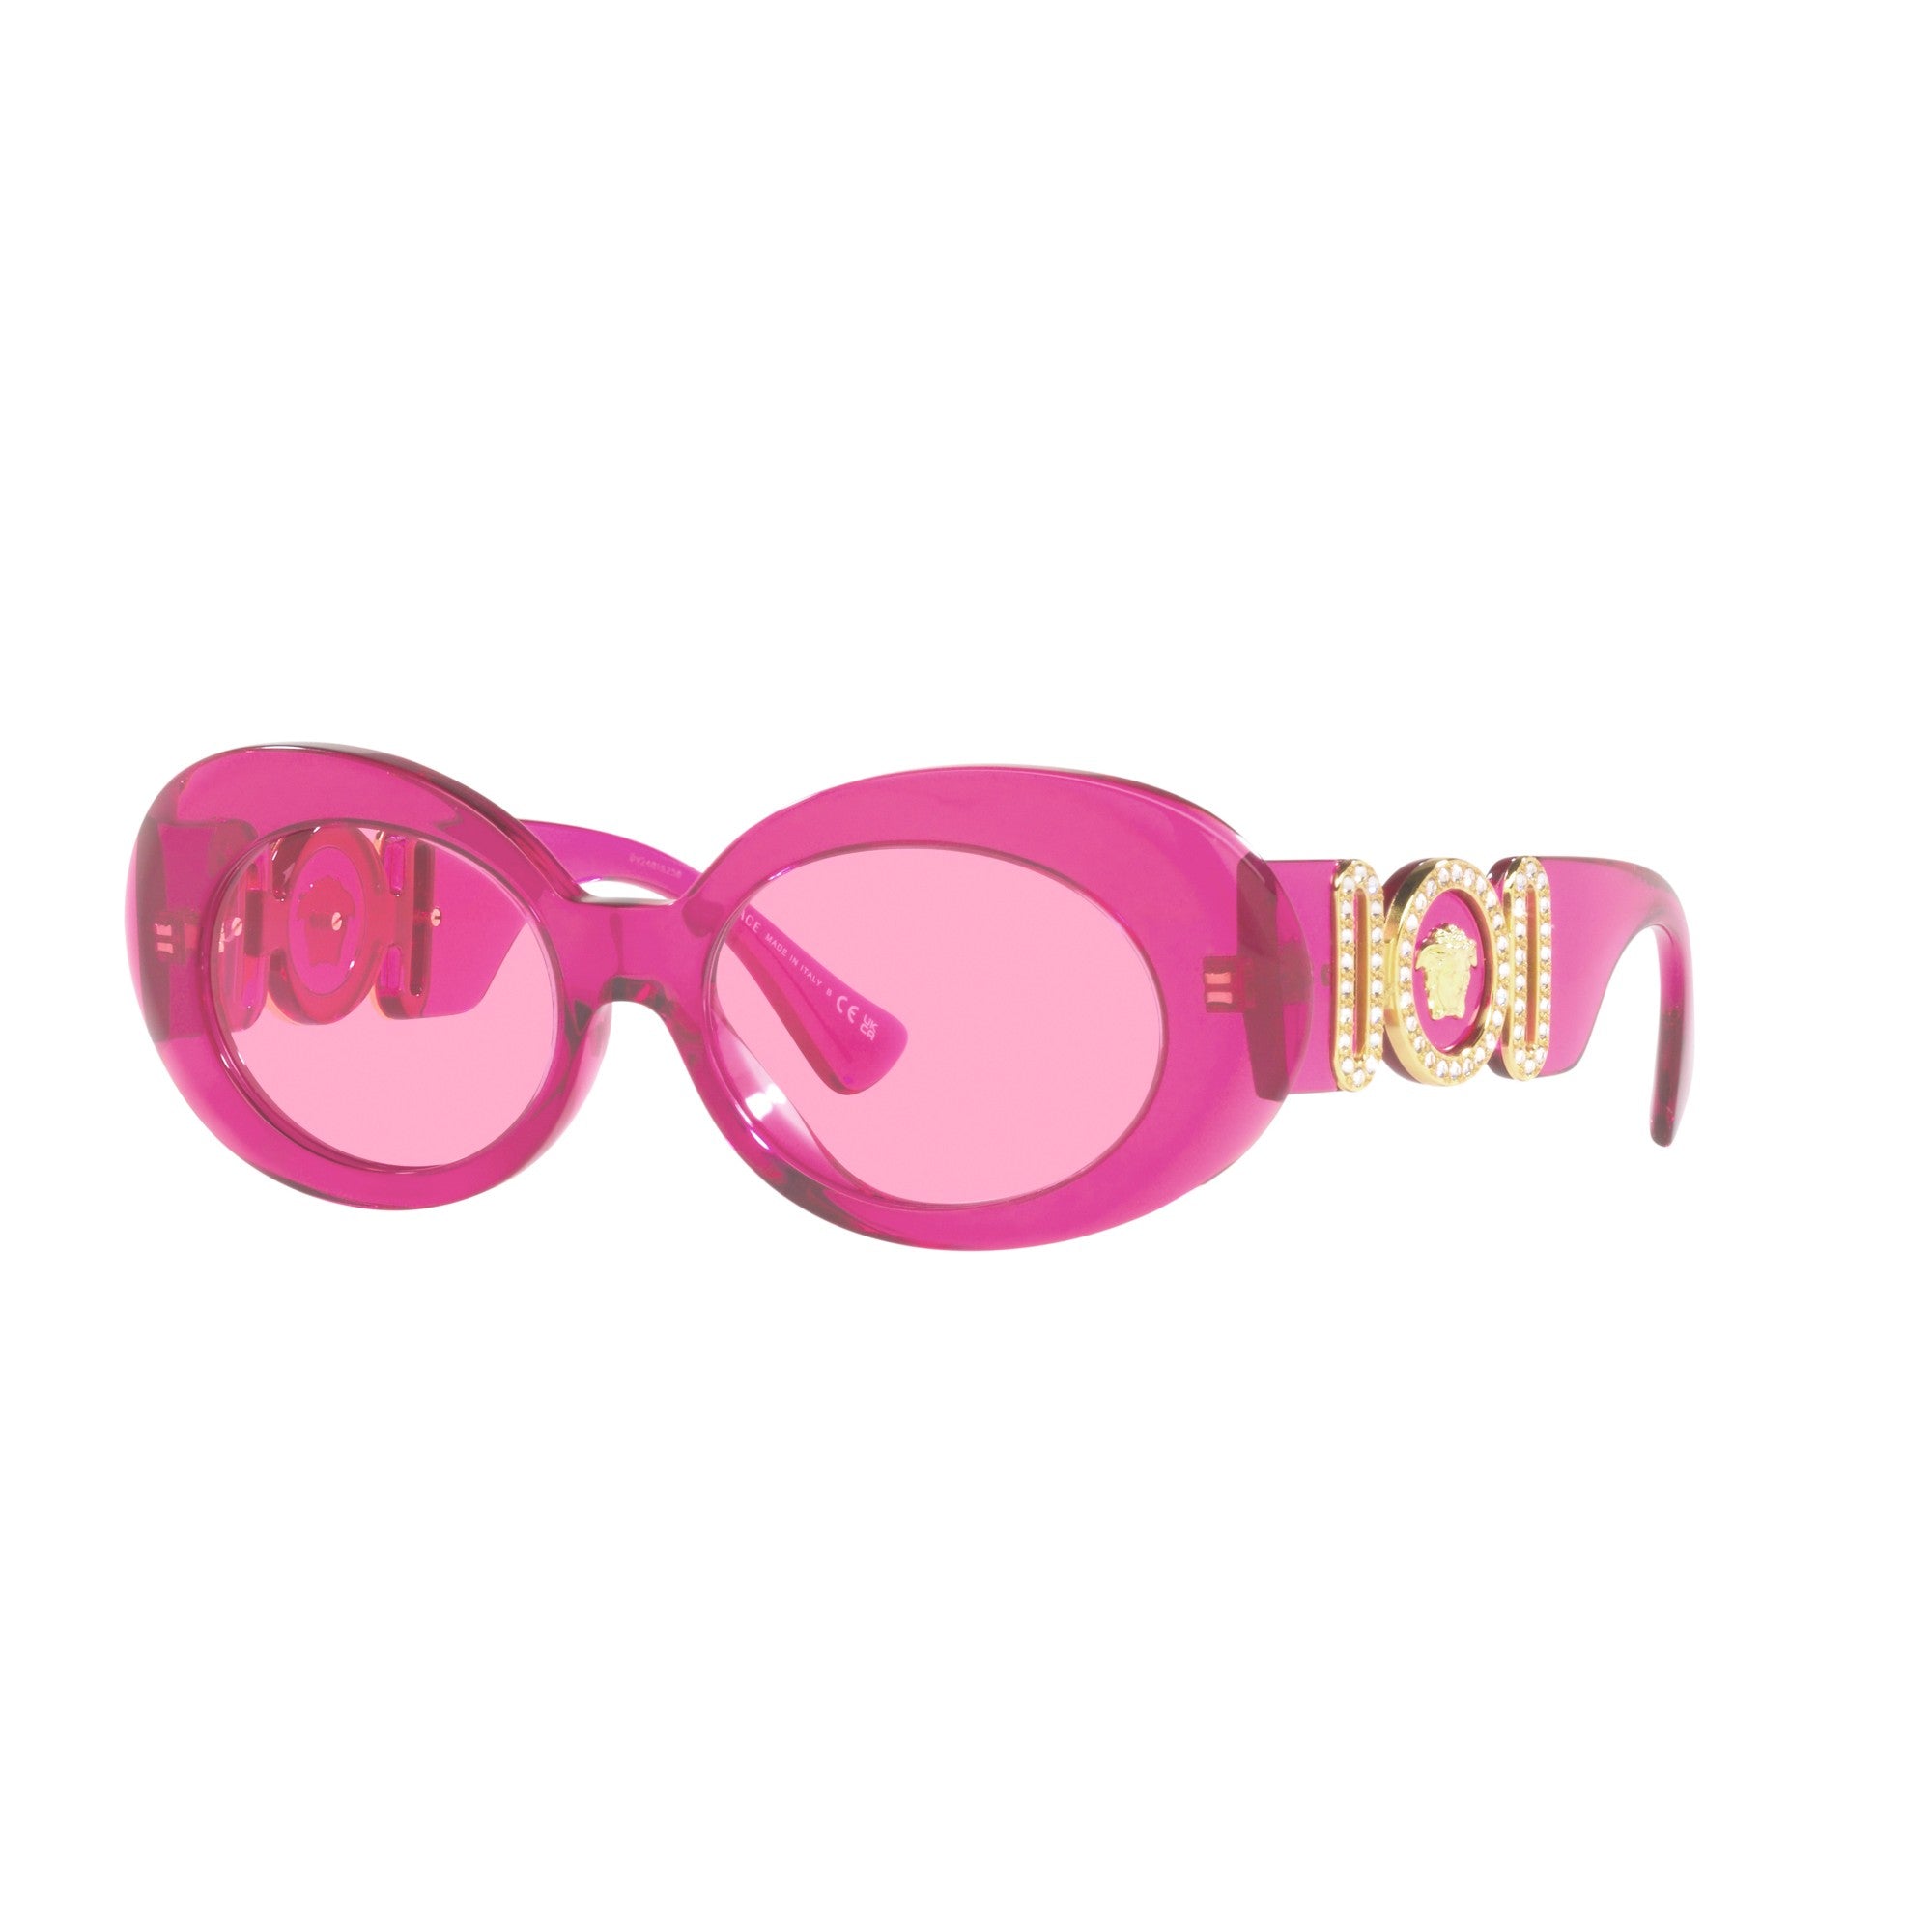 Versace Women's Transparent Fuchsia Sunglasses with Fuchsia Solid Color Lenses VE_4426BU_5334/5_54mm